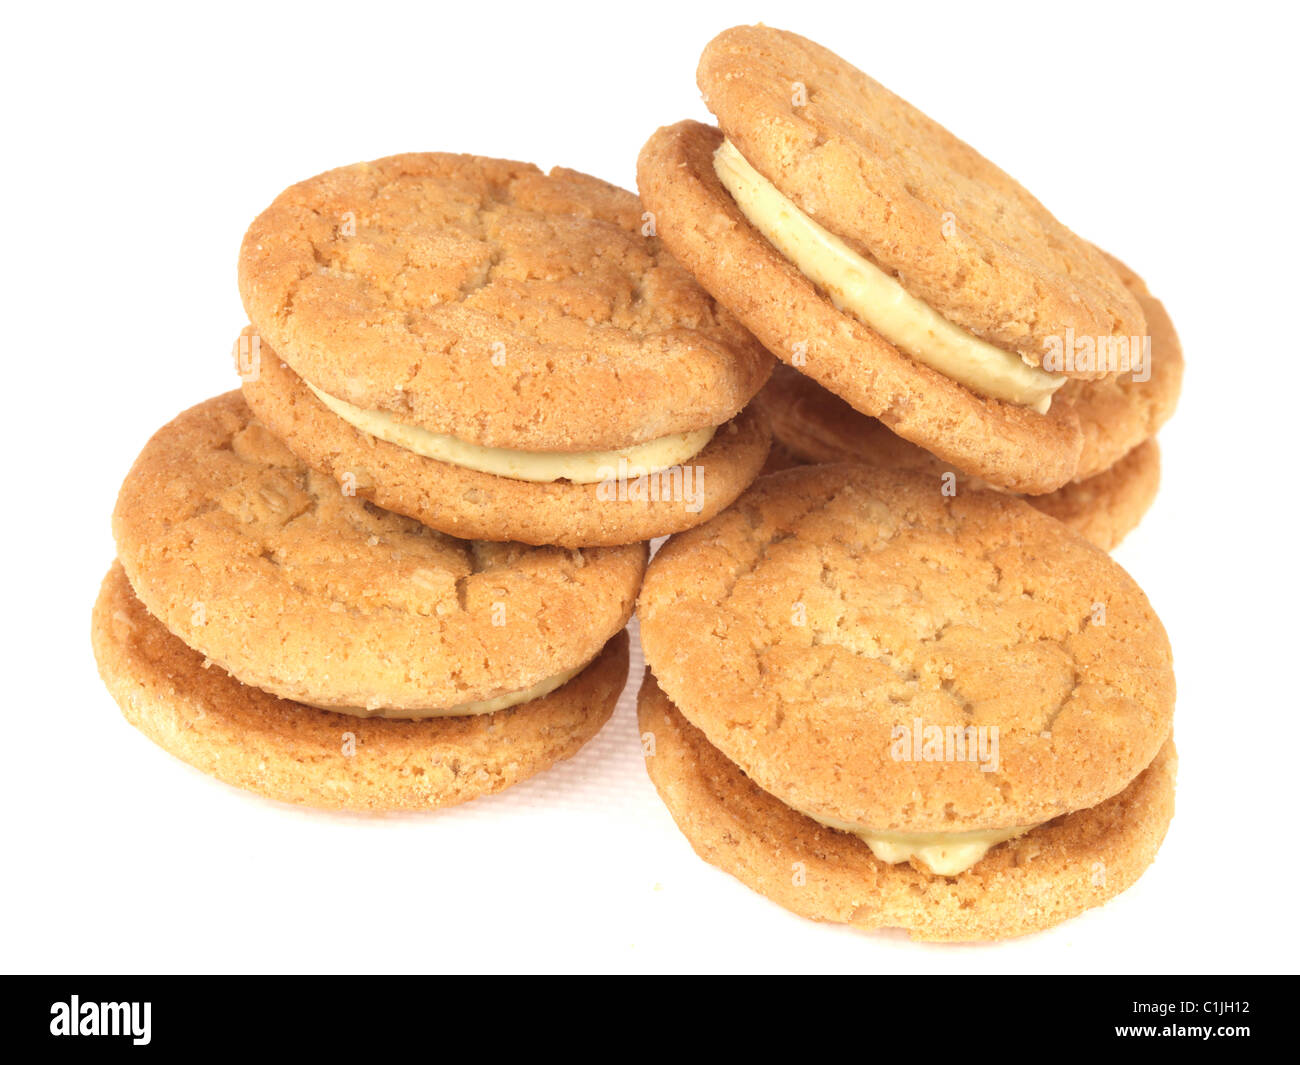 crunch-cream-biscuits-C1JH12.jpg